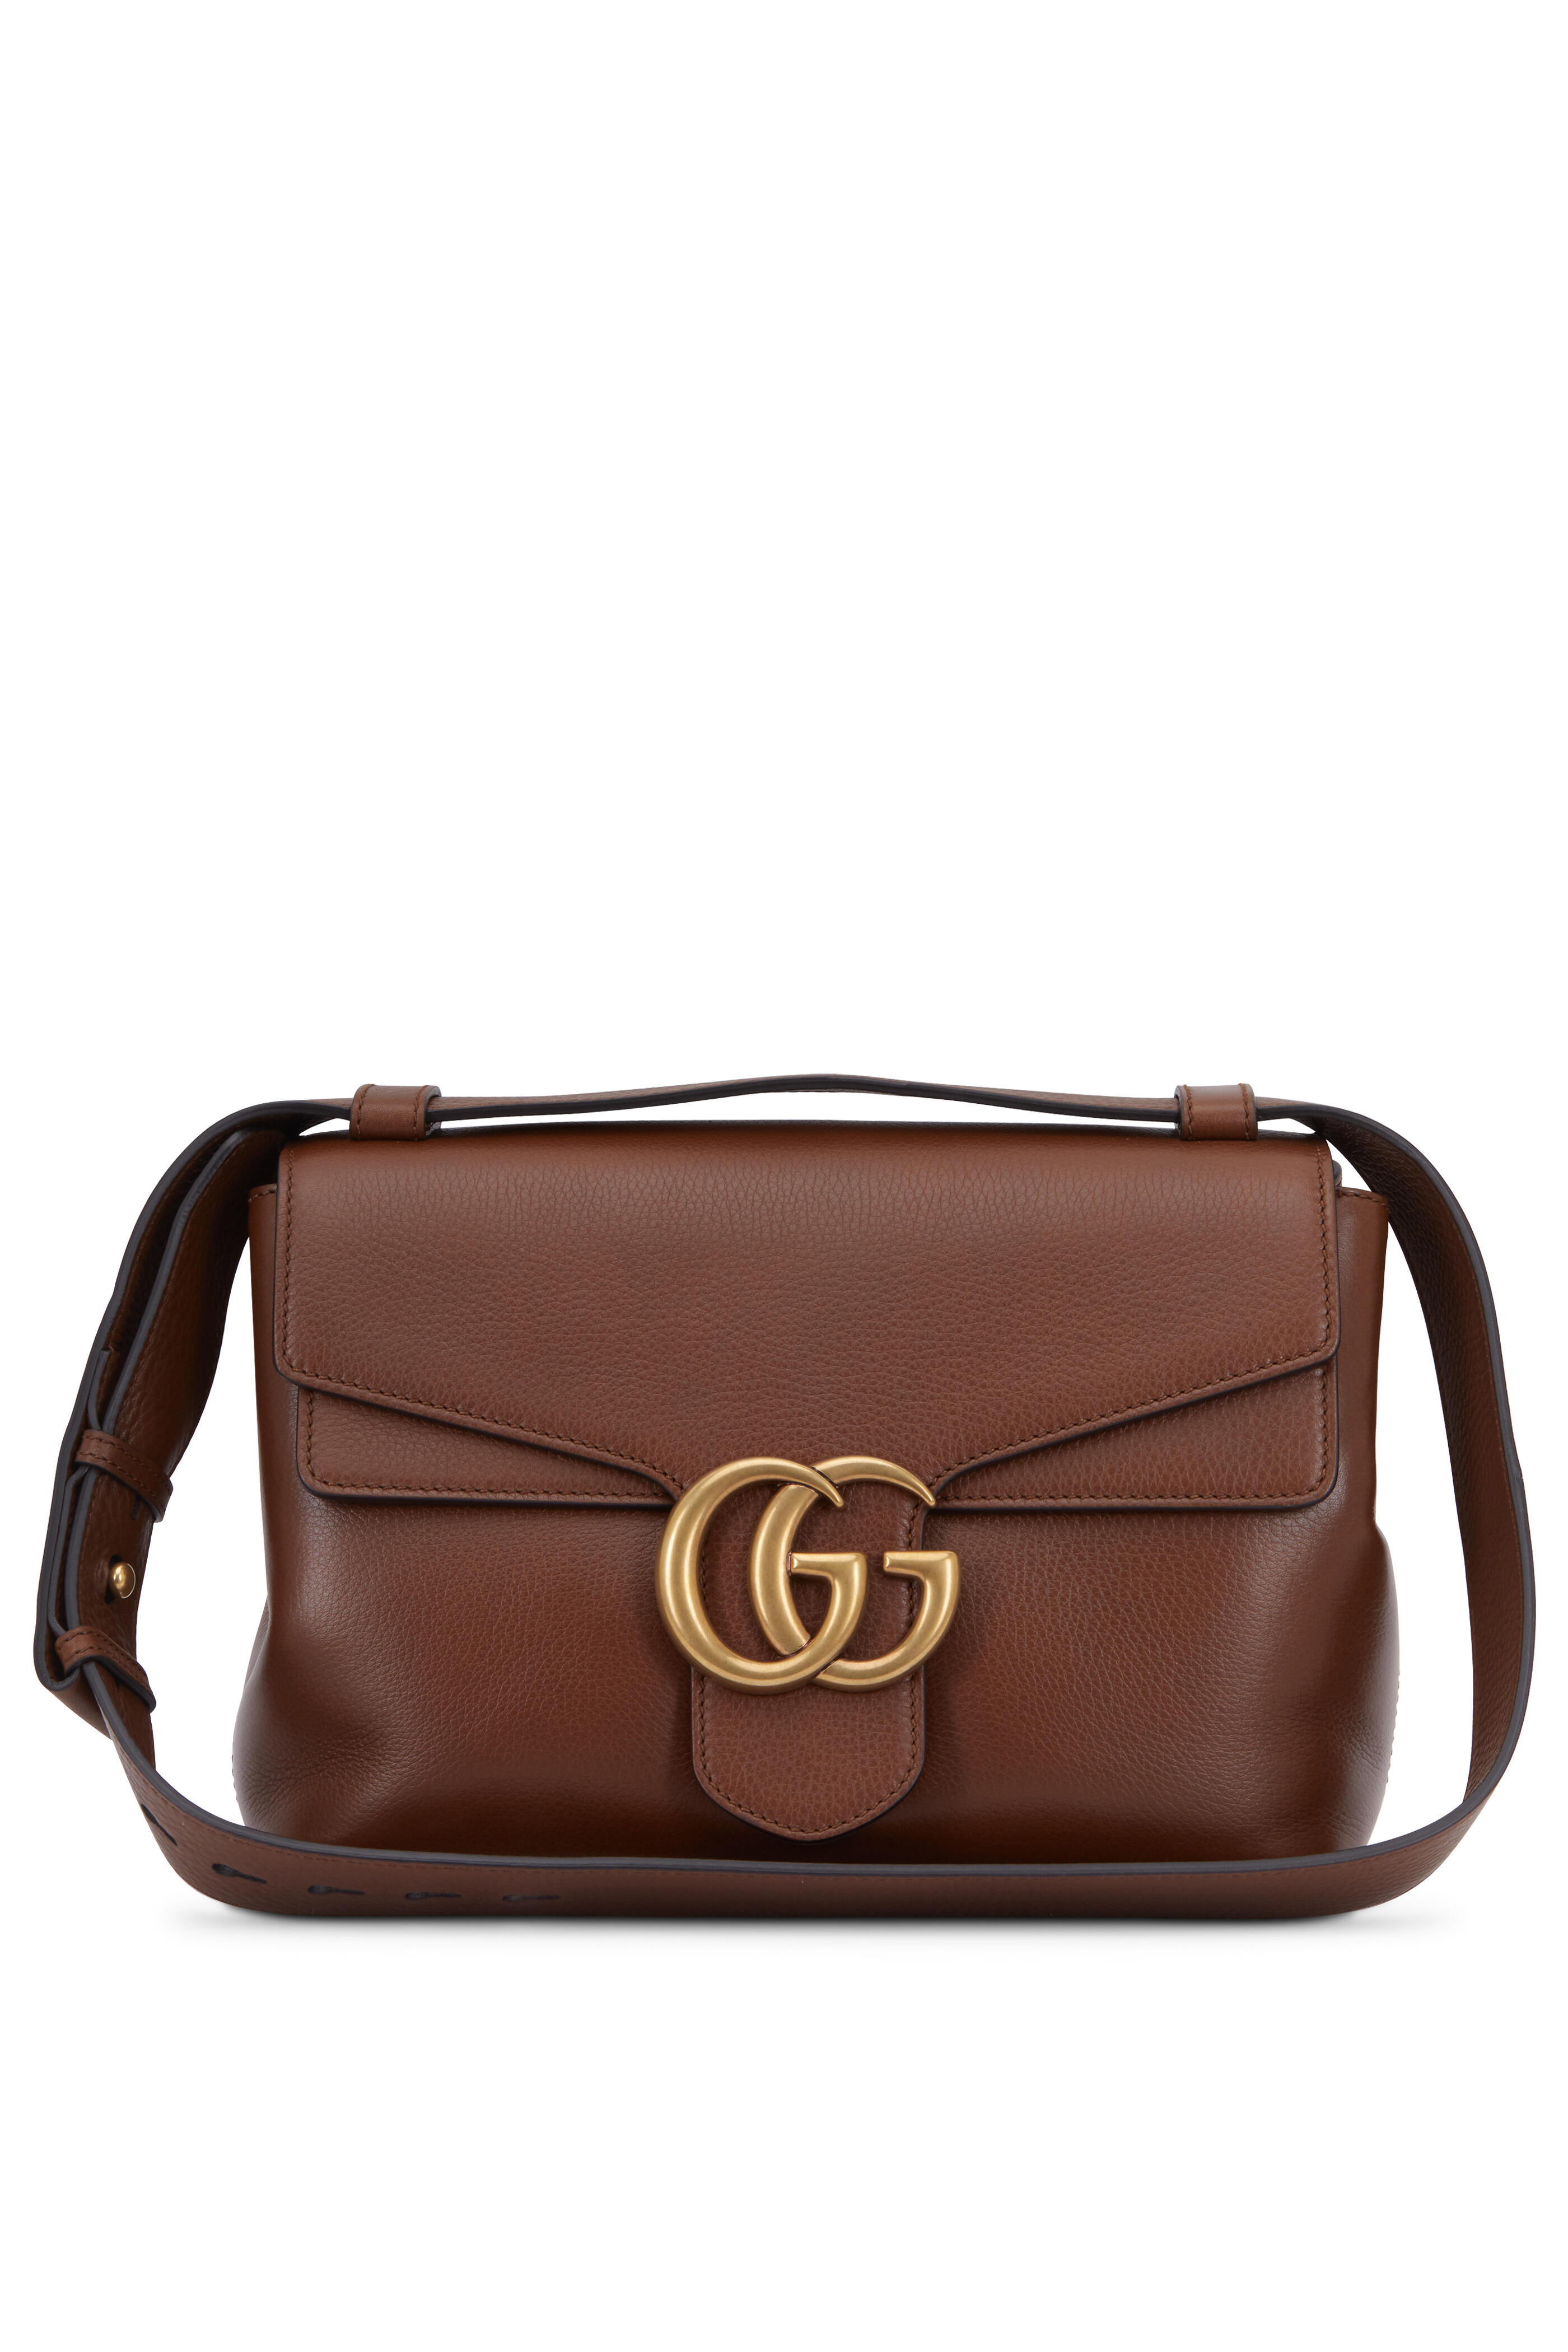 GUCCI - Gg Marmont Shoulder Bag